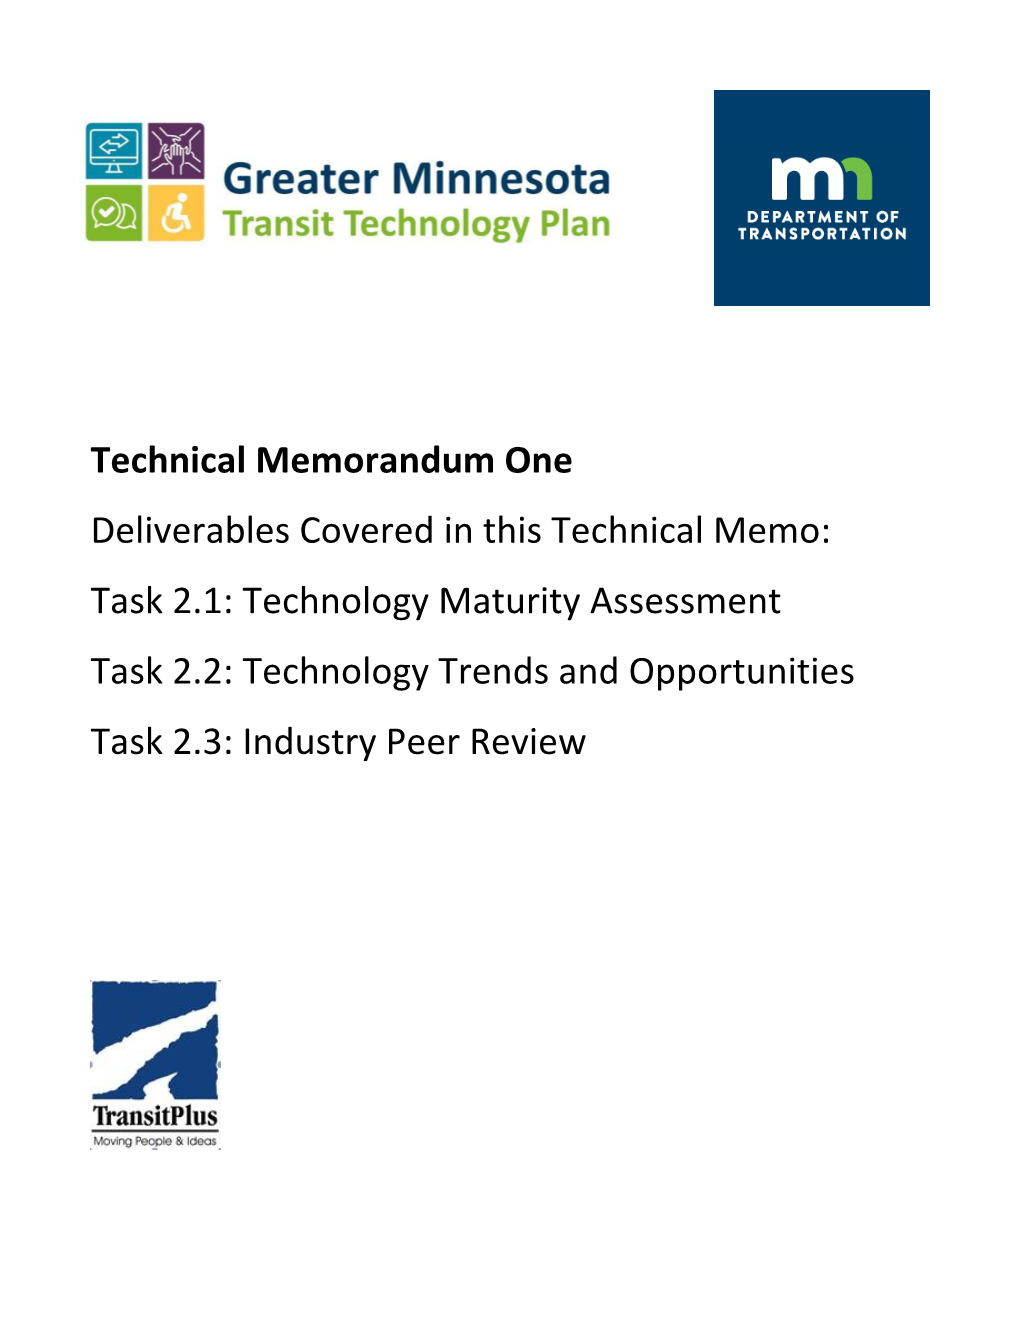 Technical Memo 1 Page I Transitplus Team Technical Memorandum One -DRAFT 11-02-2020 Table of Tables